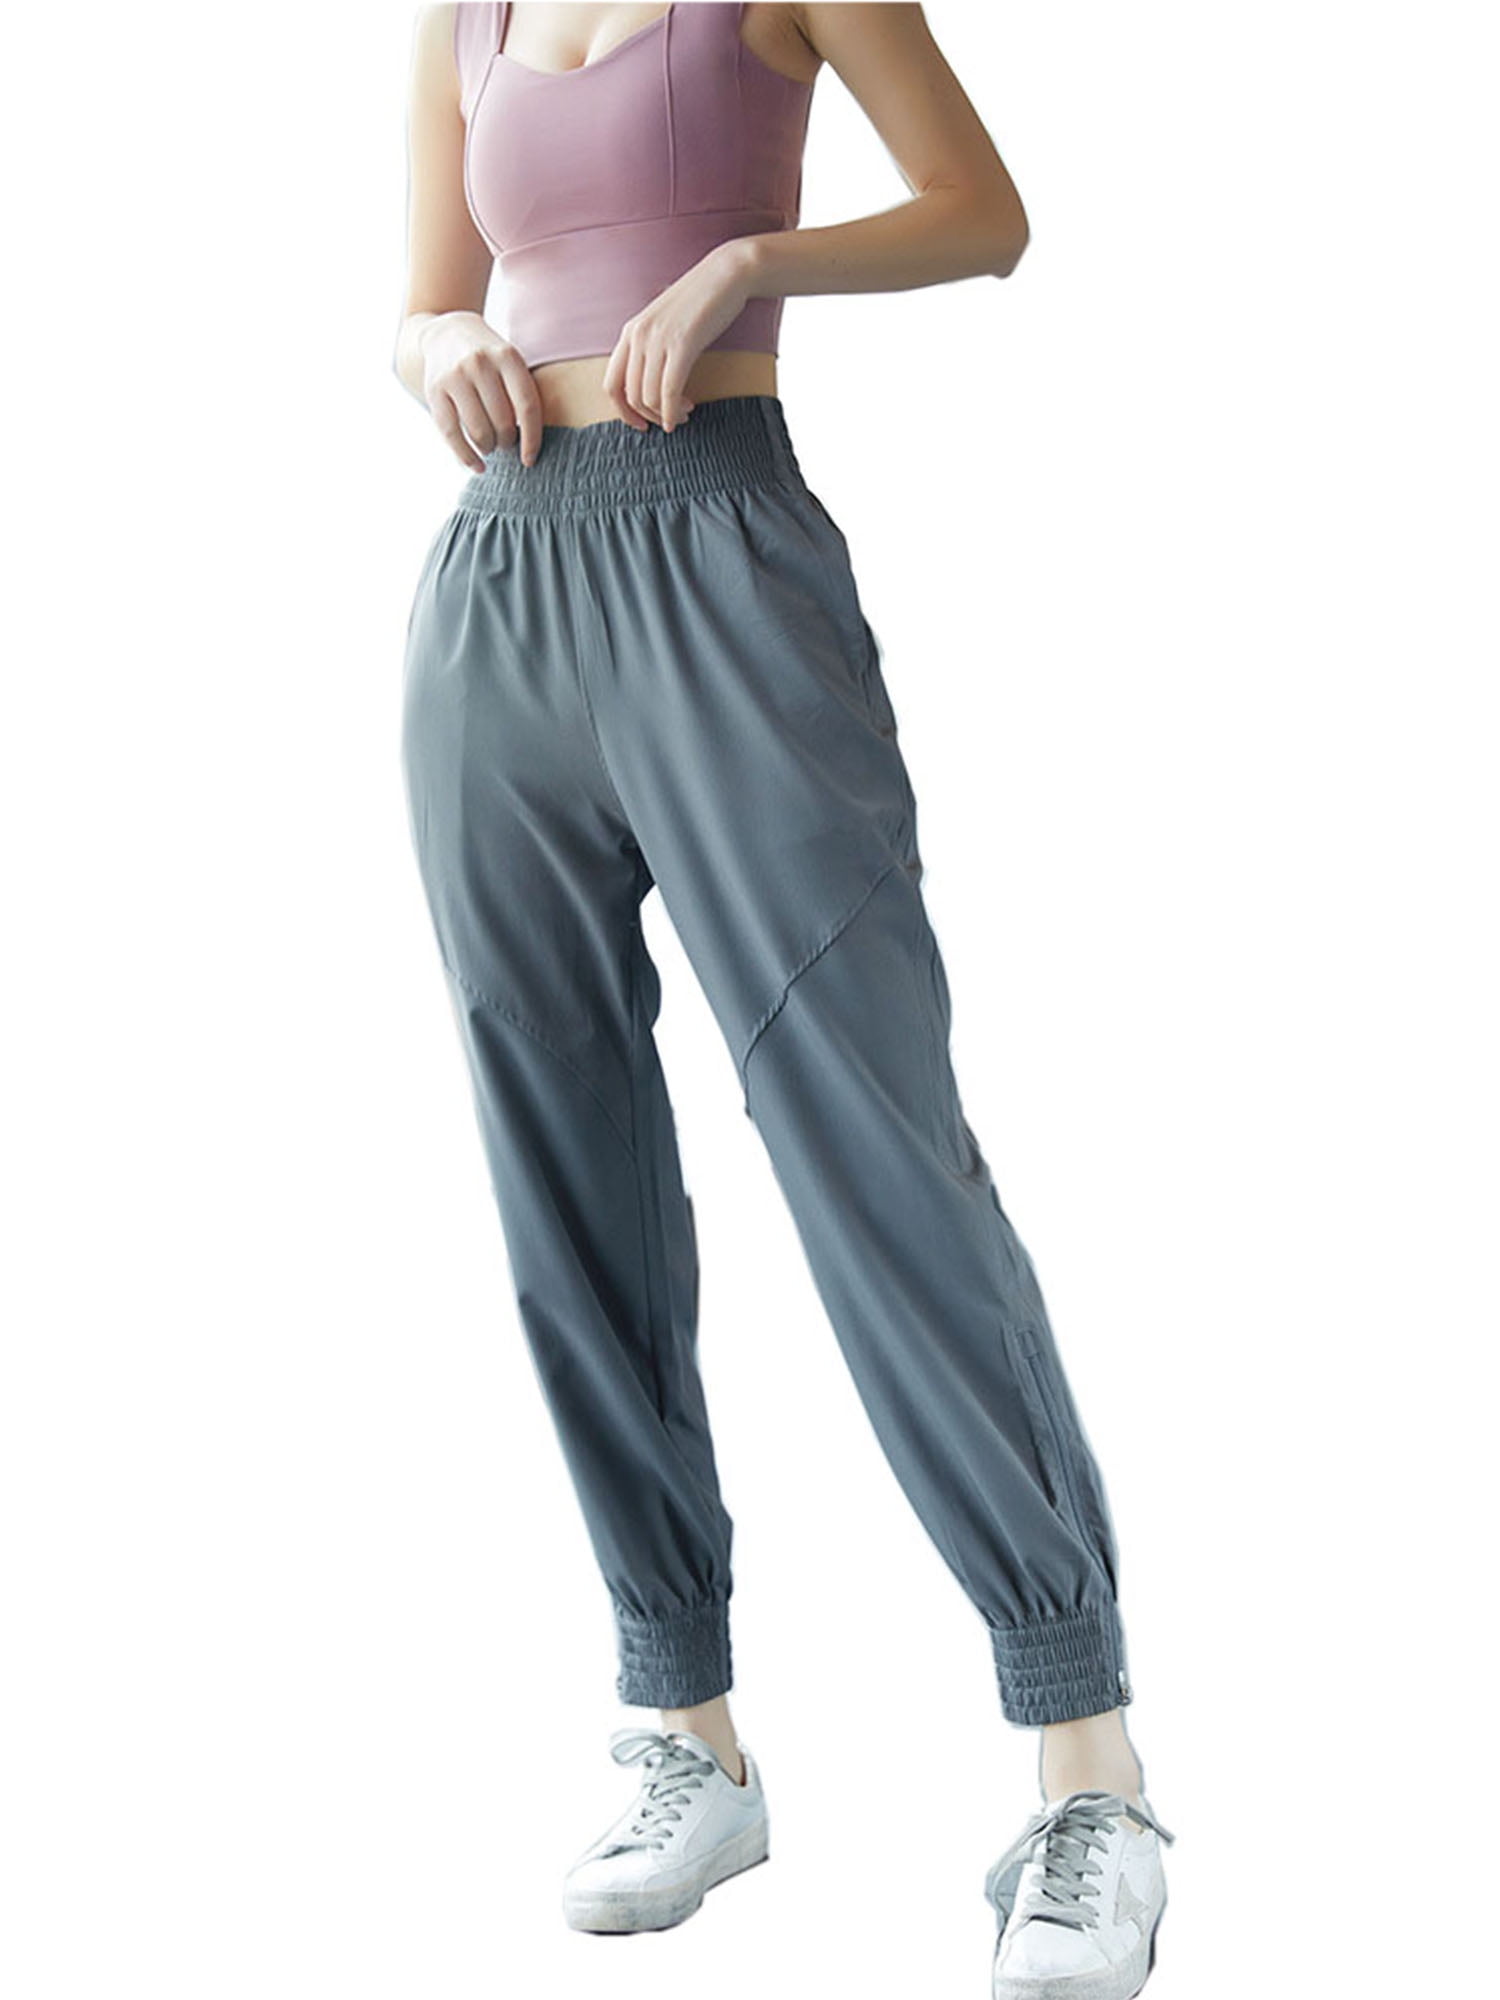 Padaleks Women Casual Cotton Soft Yoga Pants Elastic Waist Jogger Sport Dance Harem Pant Sweatpants Loose Trousers 